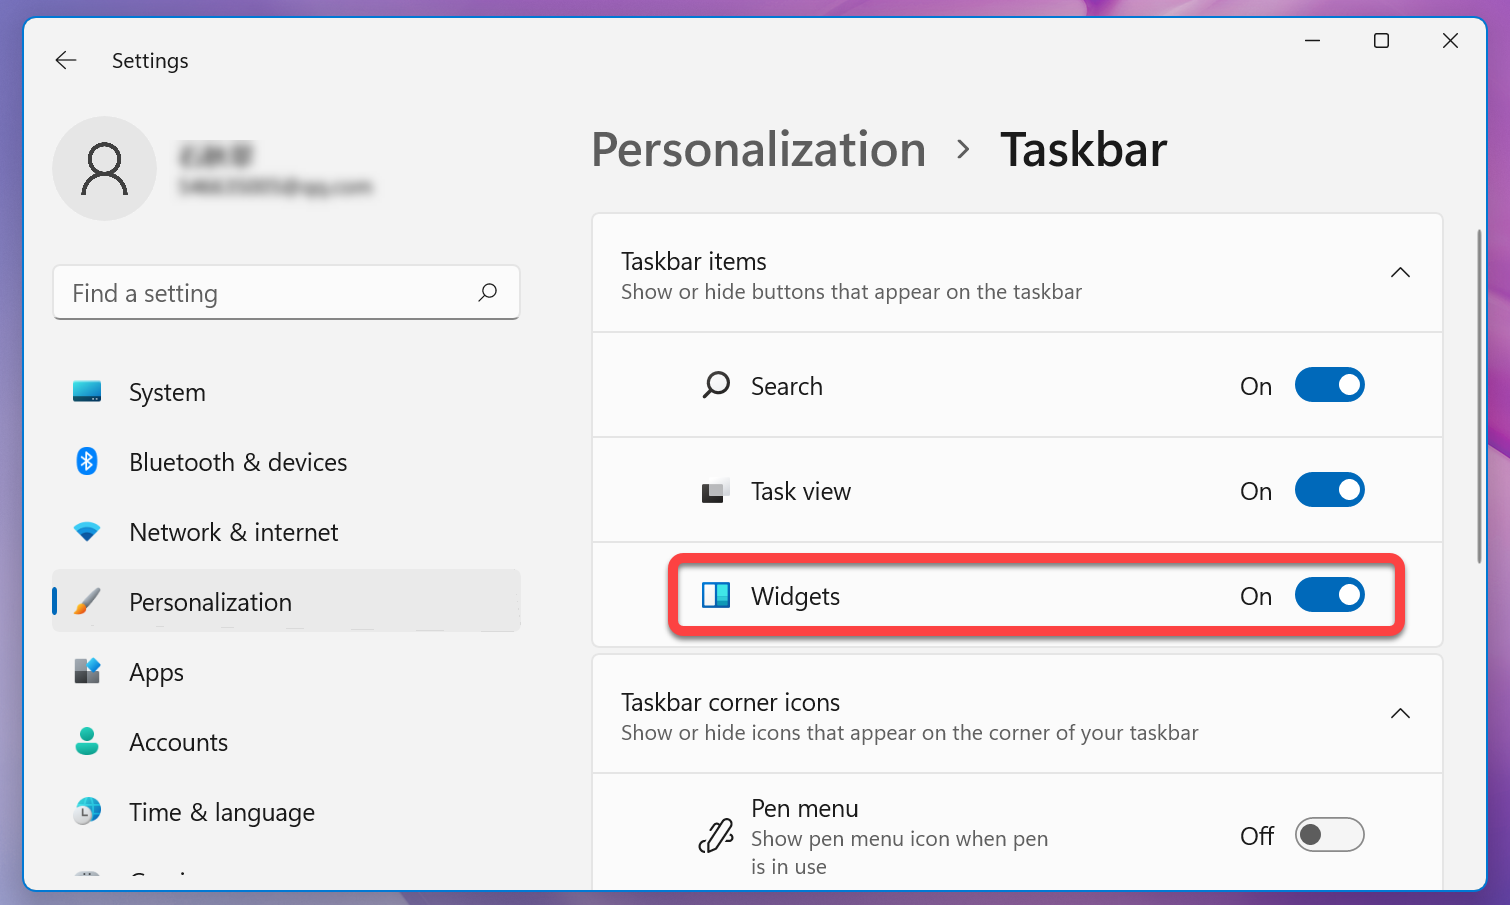 Enable Widgets in Taskbar